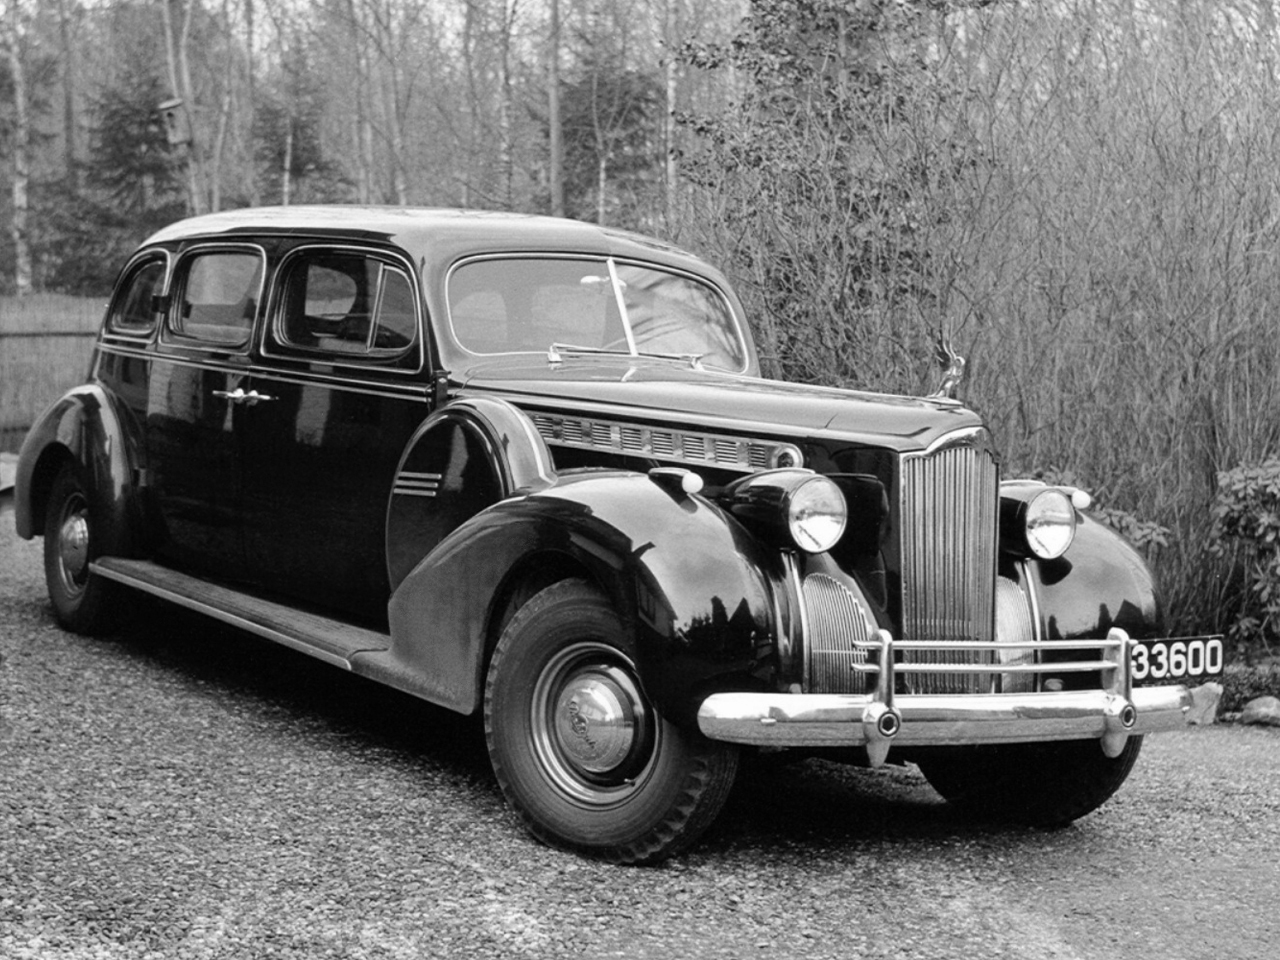 1940 Packard 120 Business Coupe - kootation.